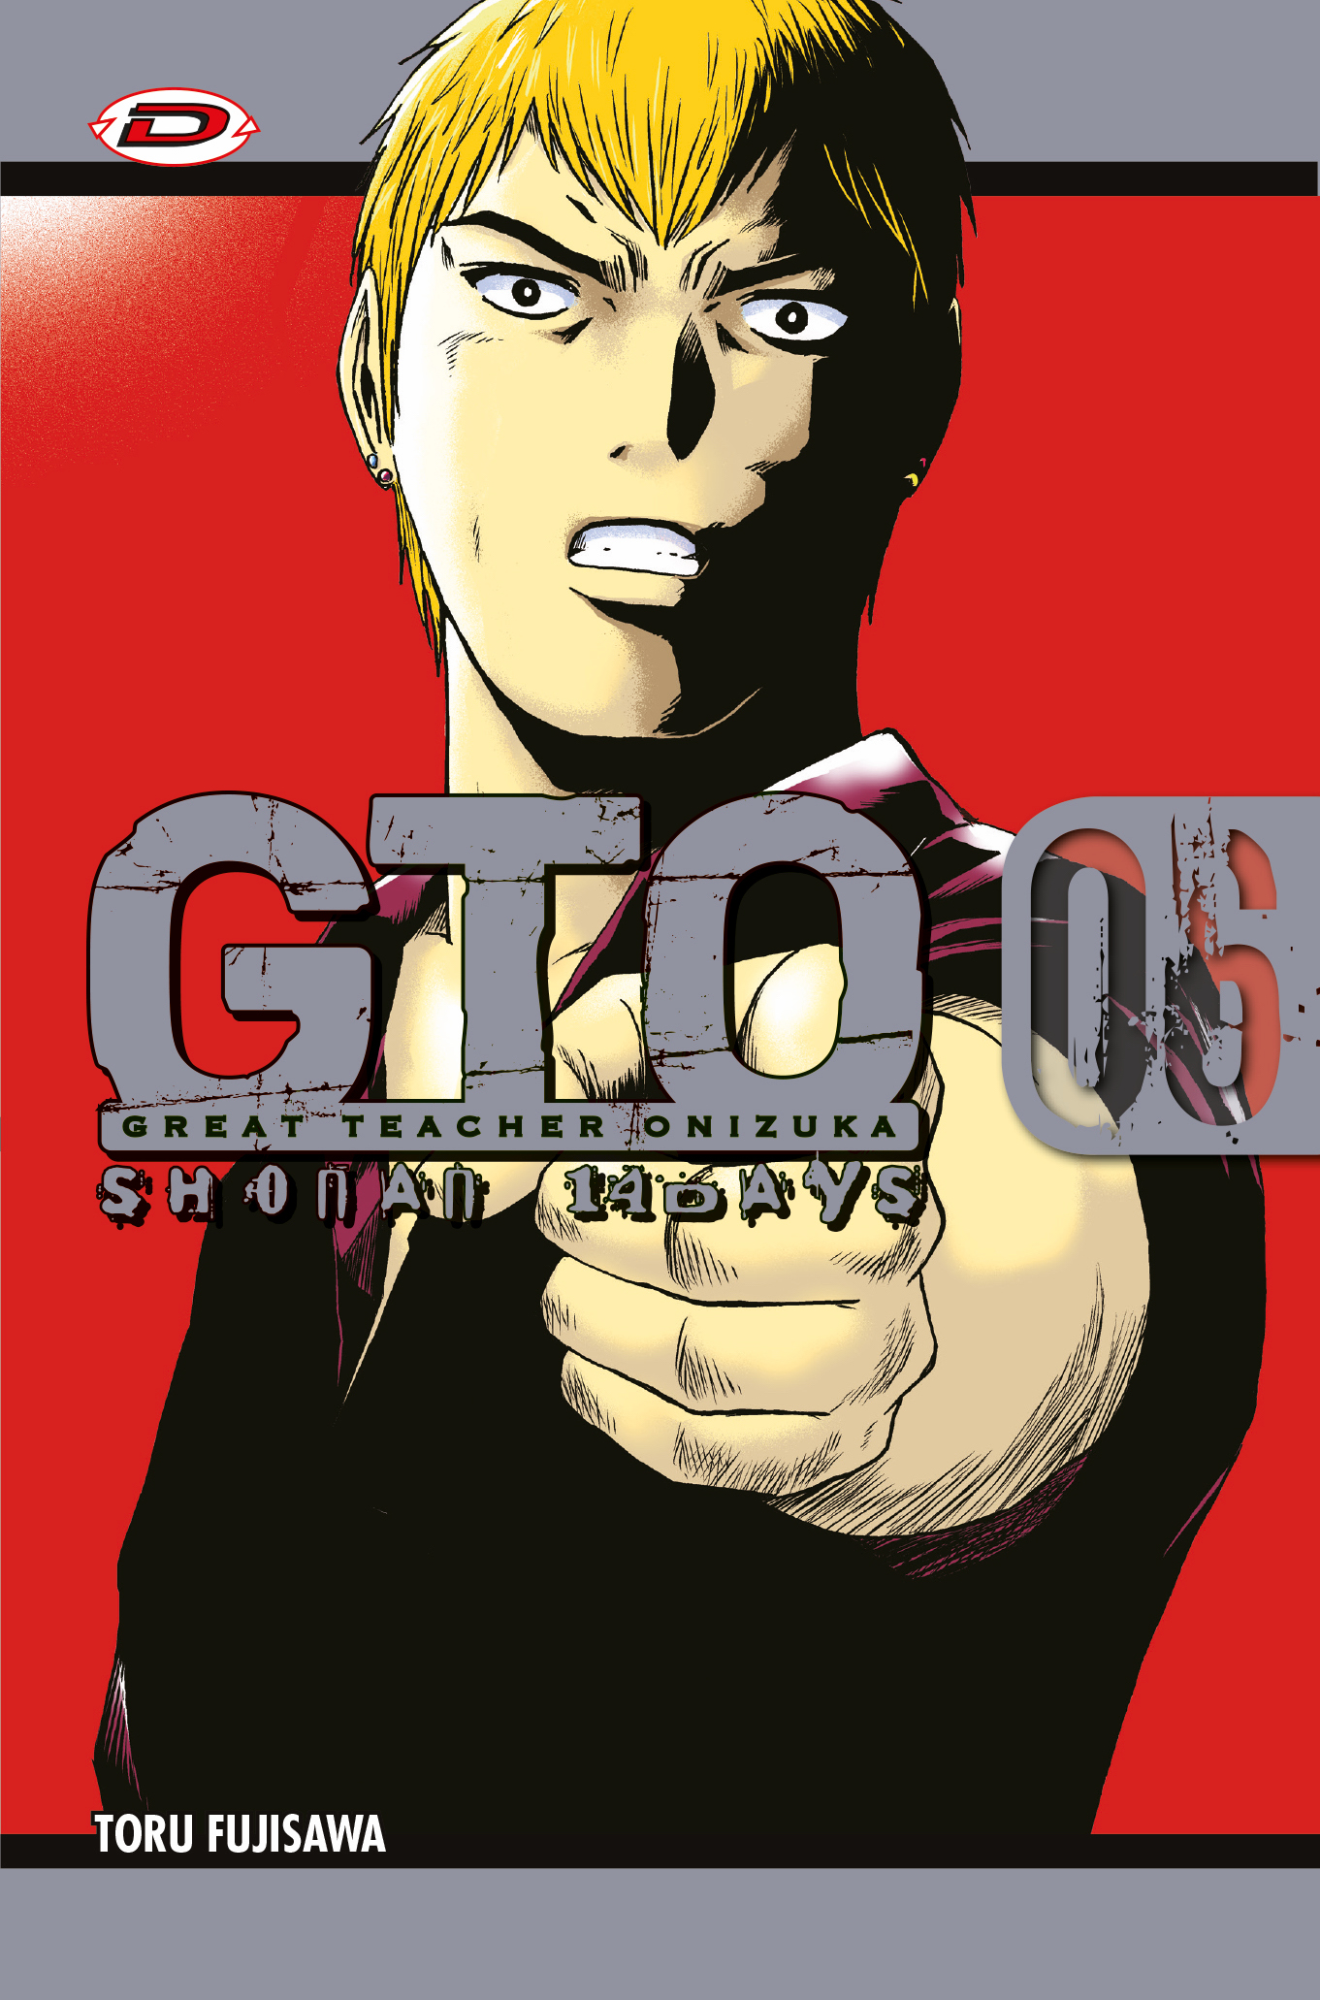 G.T.O. - Shonan 14 Days #06